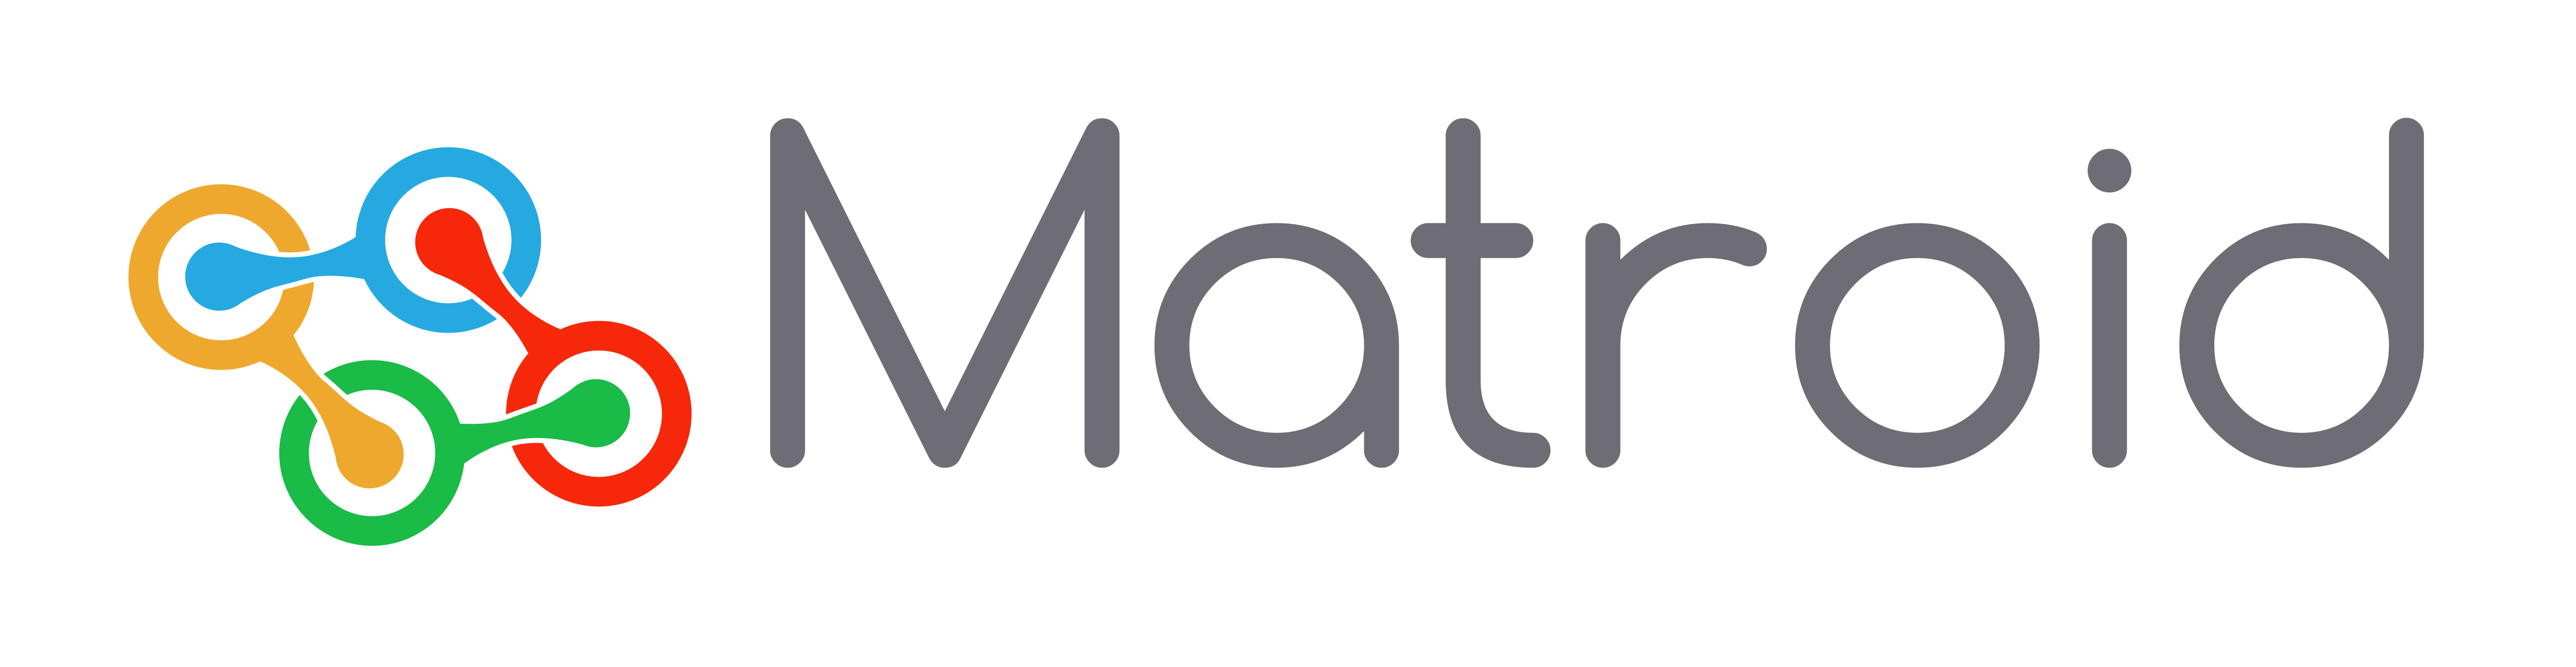 Matroid: Bringing Machine Learning to Life